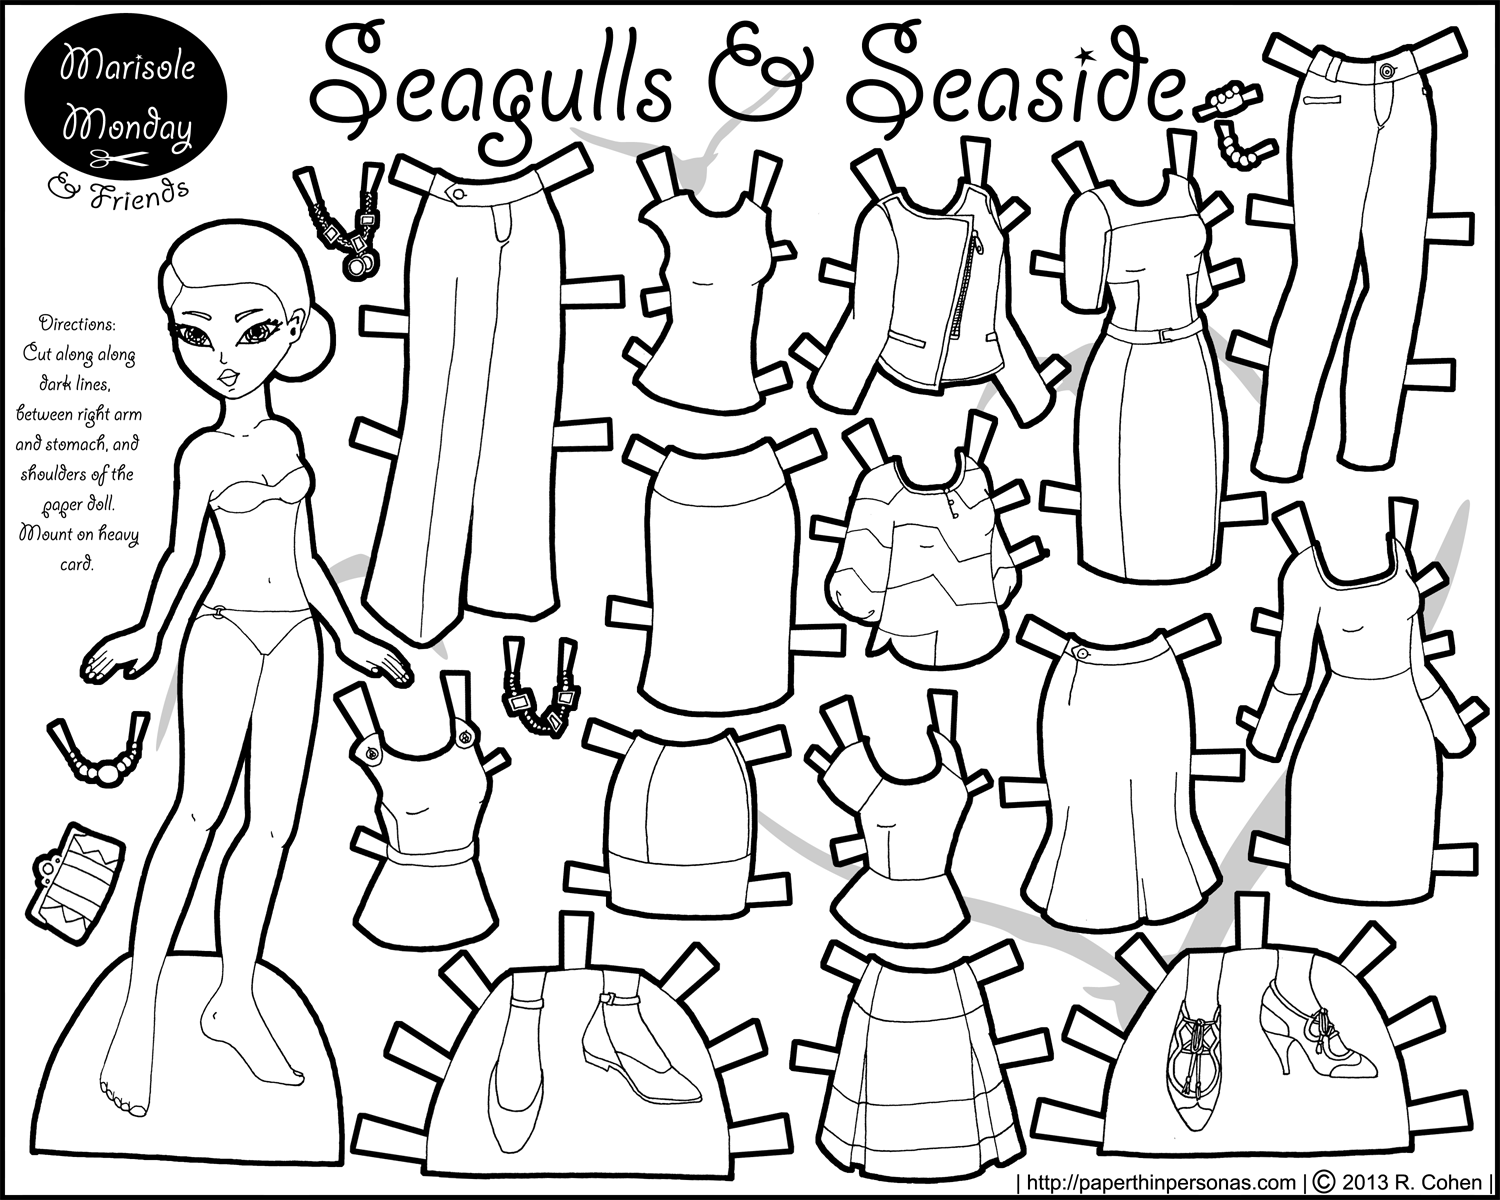 marisole-monday-friends-seagulls-seaside-paper-thin-personas-paper-thin-personas